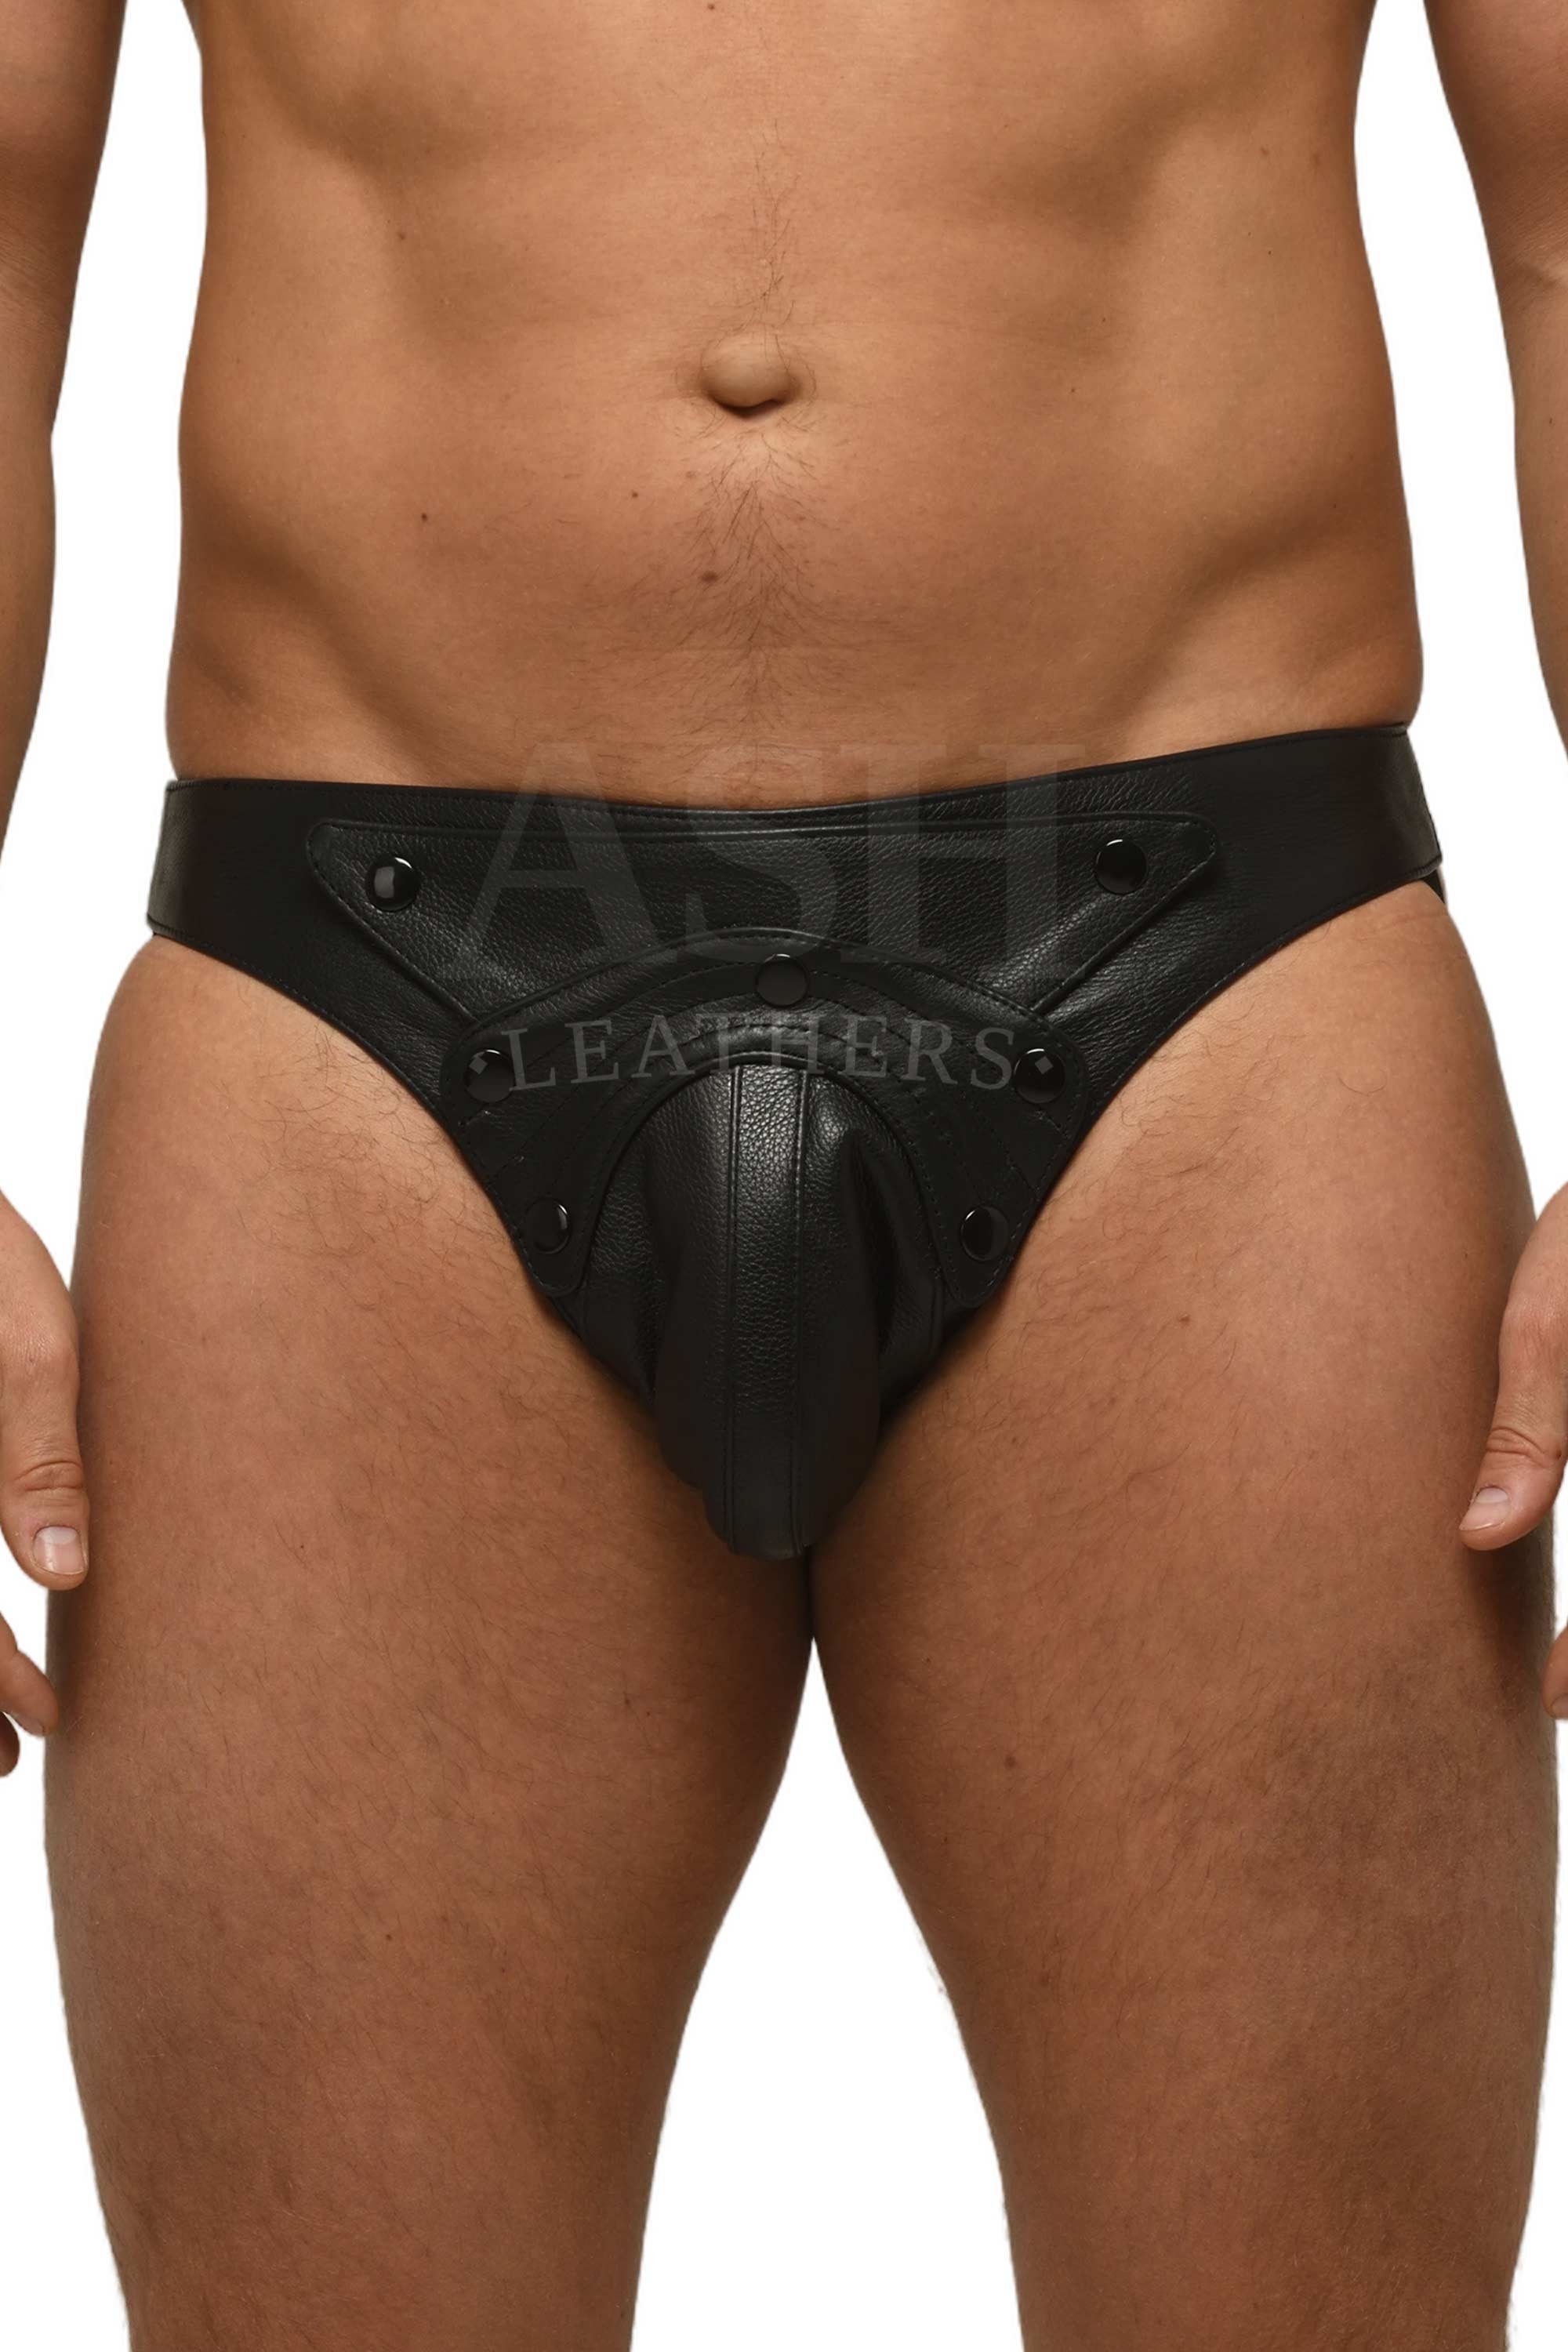 Leather Underwear -  Canada